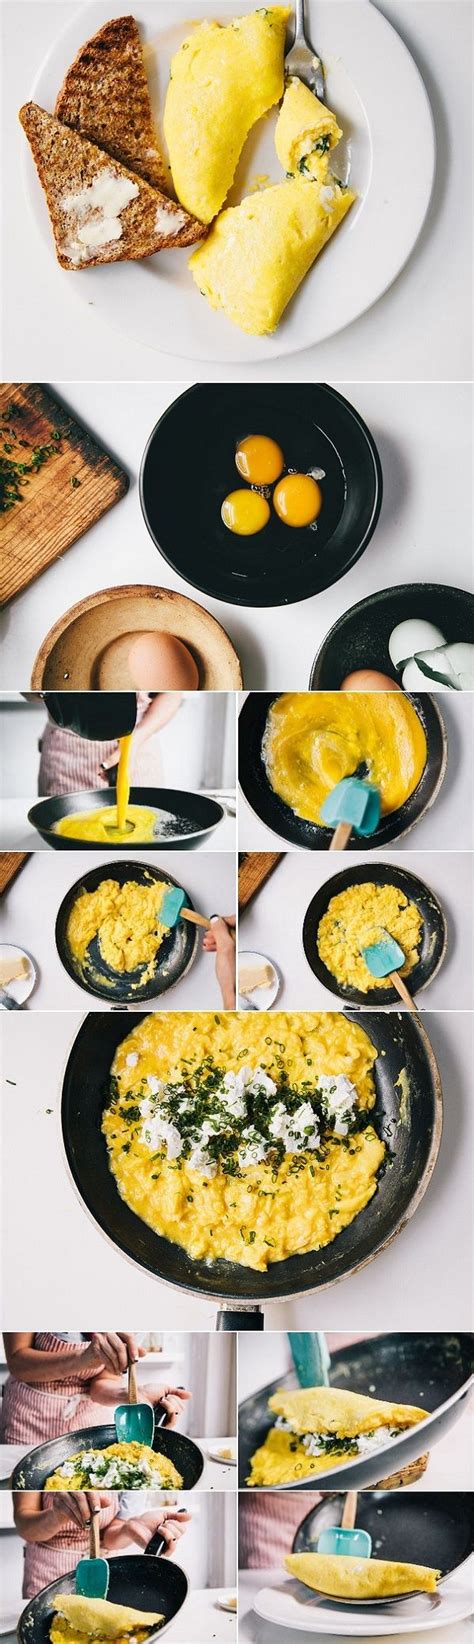 French Omelette á La Julia Child Food Julia Child Recipes Food